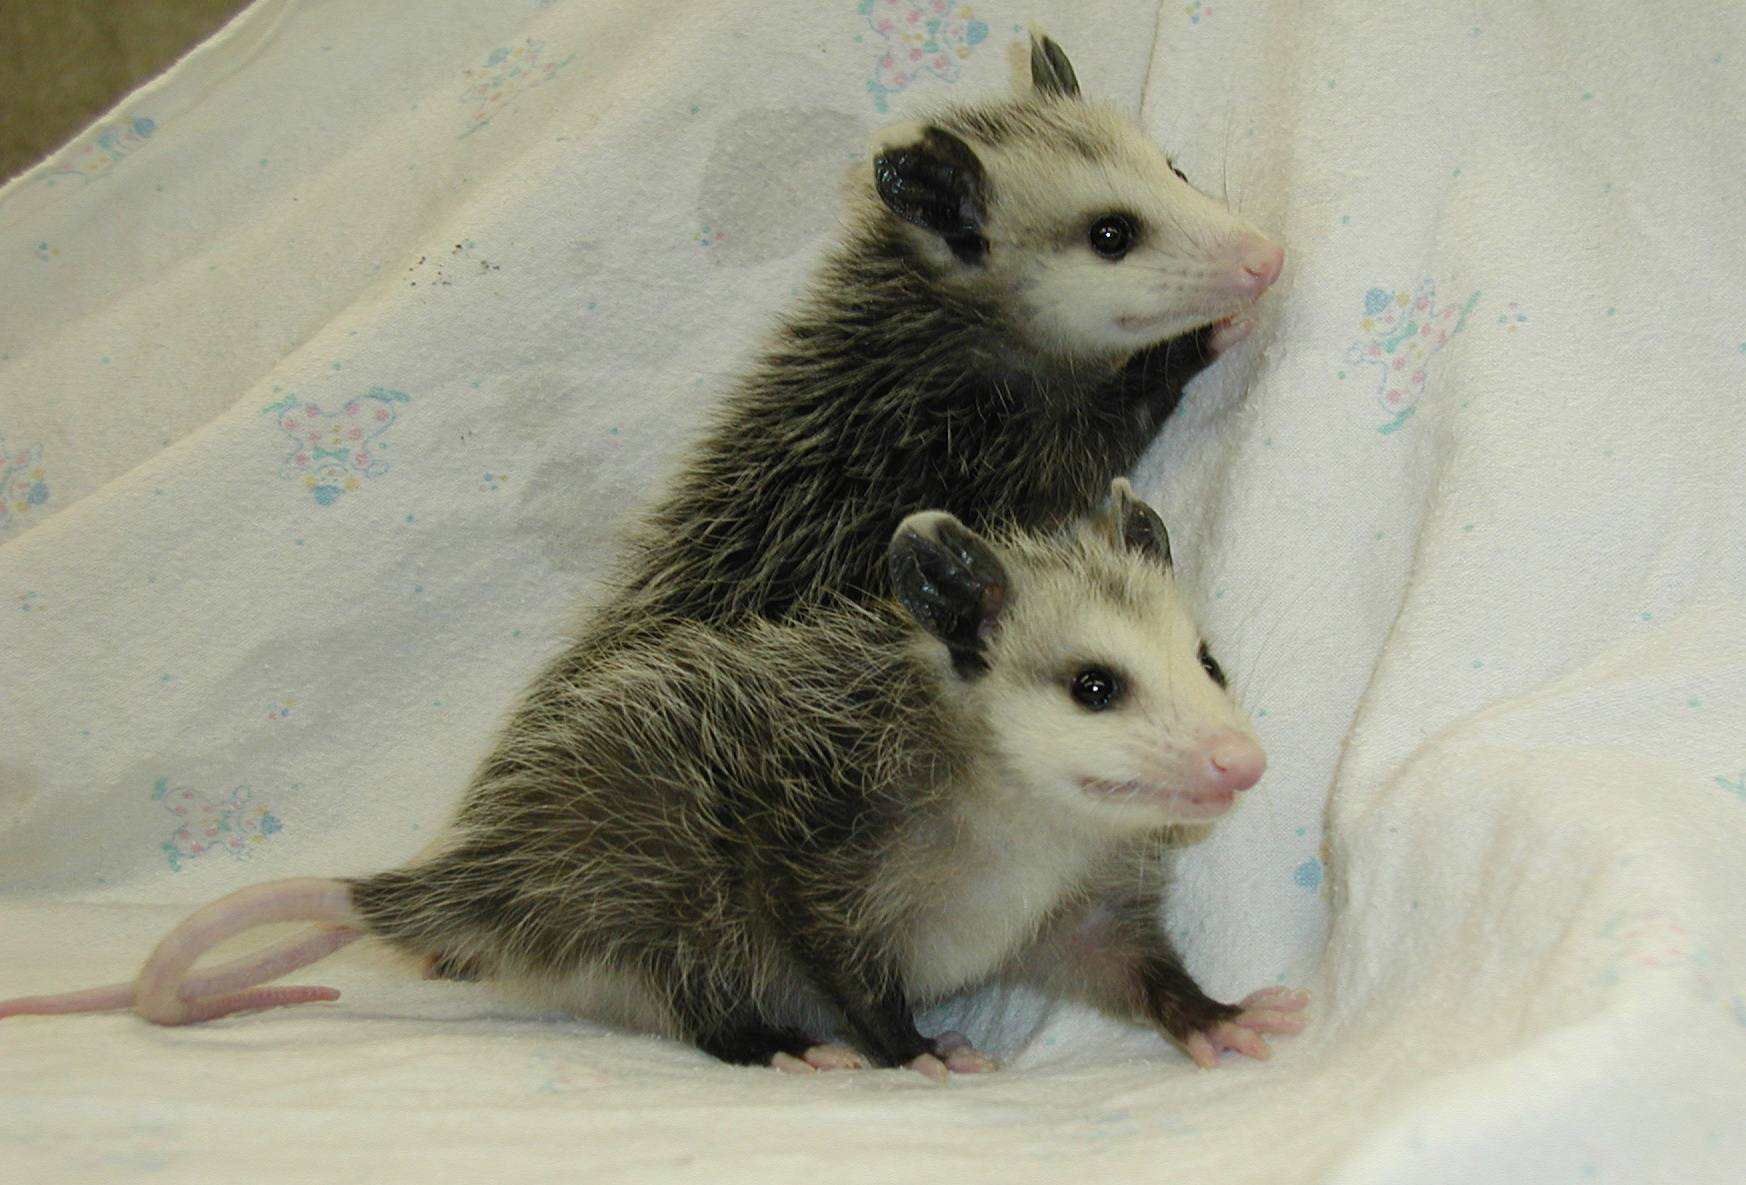 Young Virginia Opossums